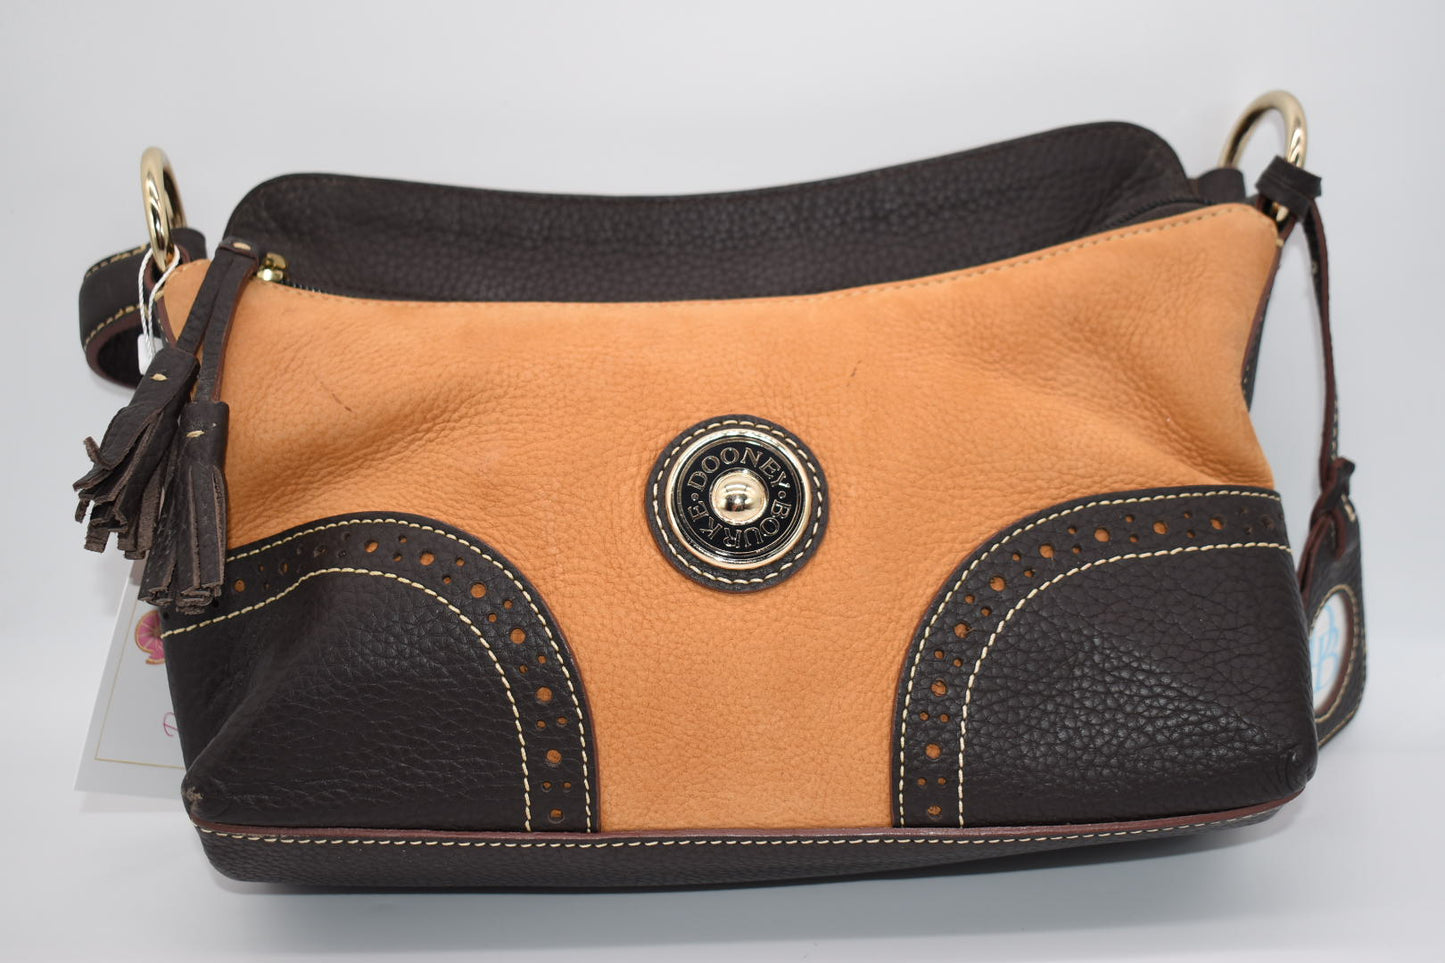 Dooney & Bourke Tangerine Nubuck Leather Shoulder Bag